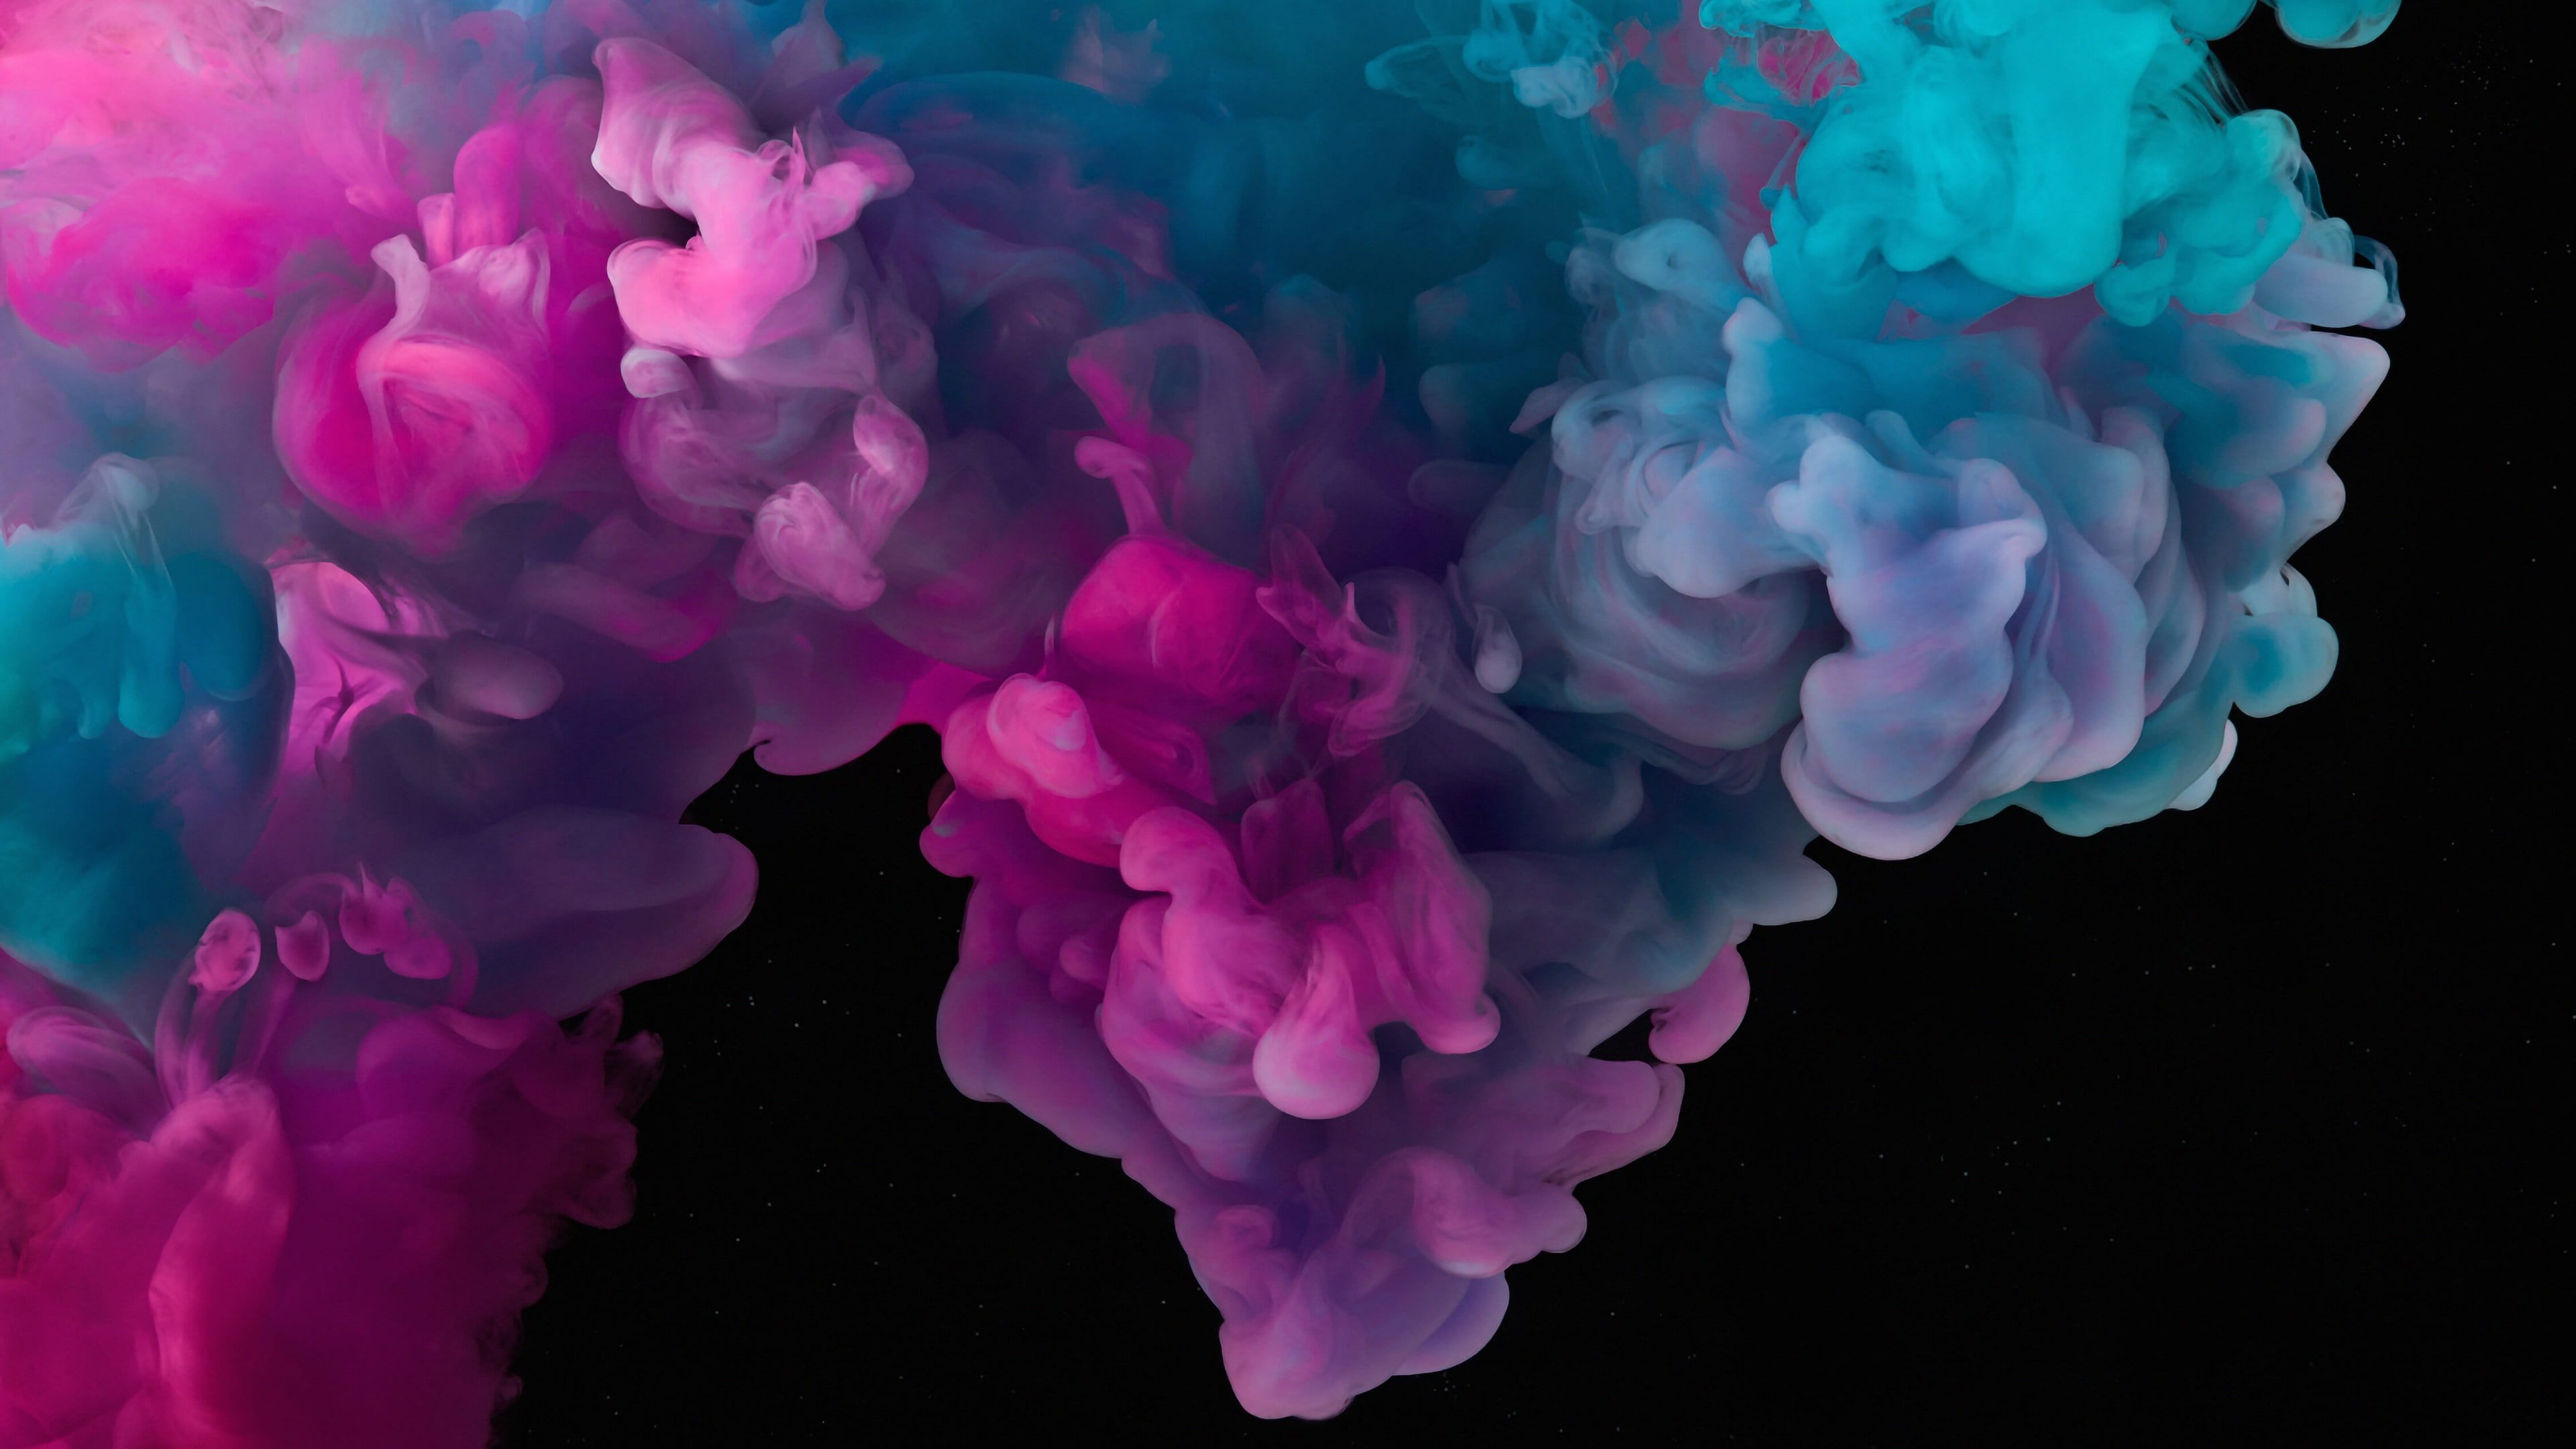 smoke #colorful #blue #pink K #wallpaper #hdwallpaper #desktop. Smoke wallpaper, Colored smoke, Laptop wallpaper